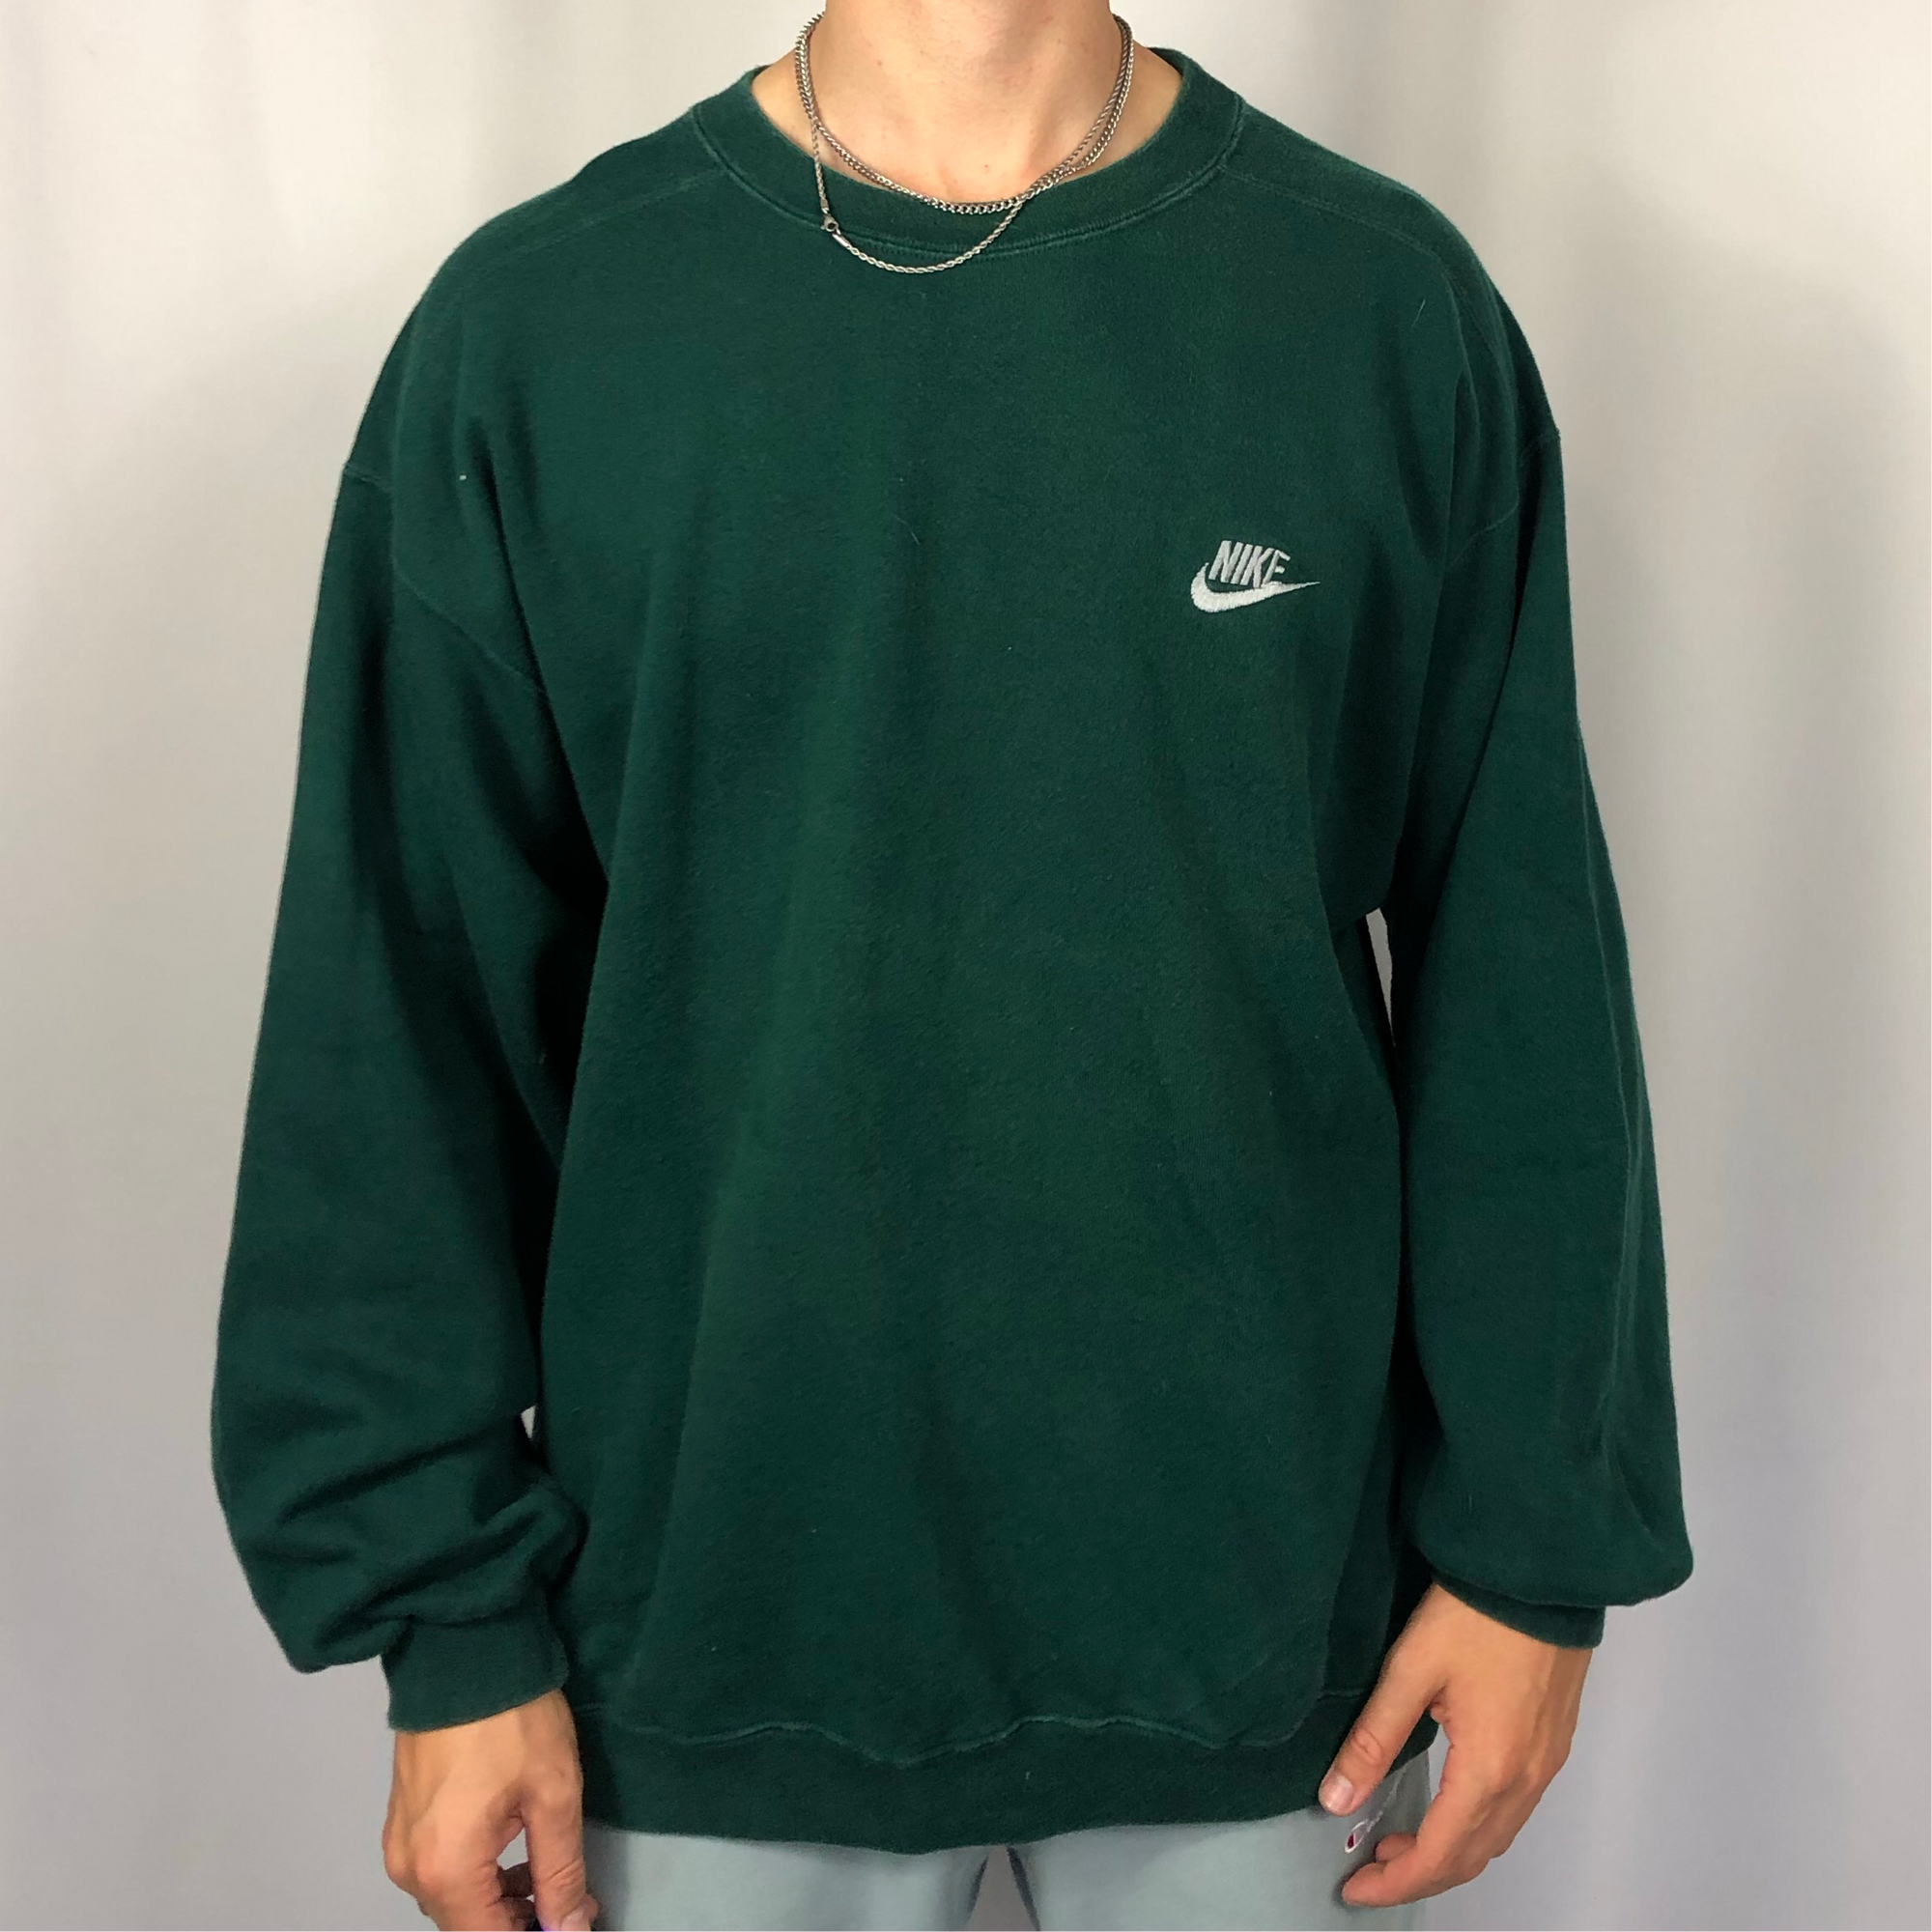 Vintage Nike Sweatshirt in Green - XL - Vintique Clothing